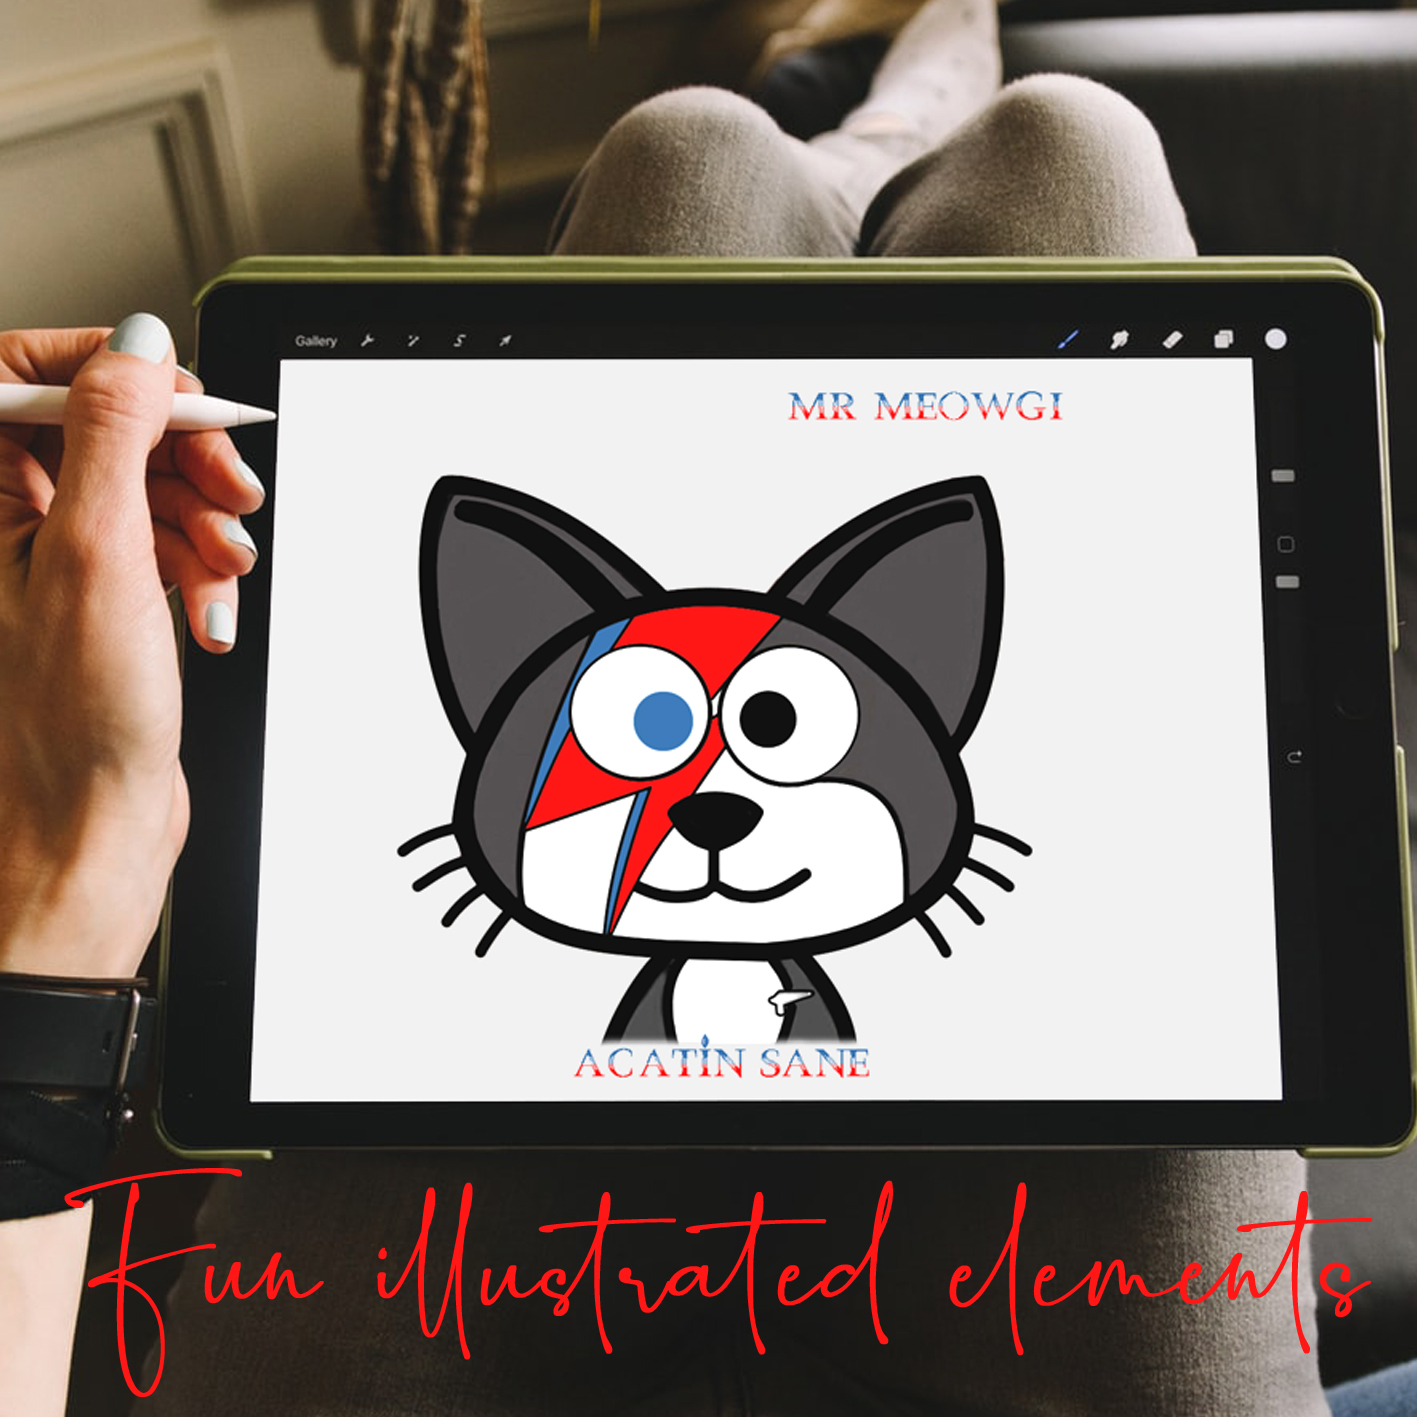 fun-illustrated-elements-cat-graphic-on-ipad